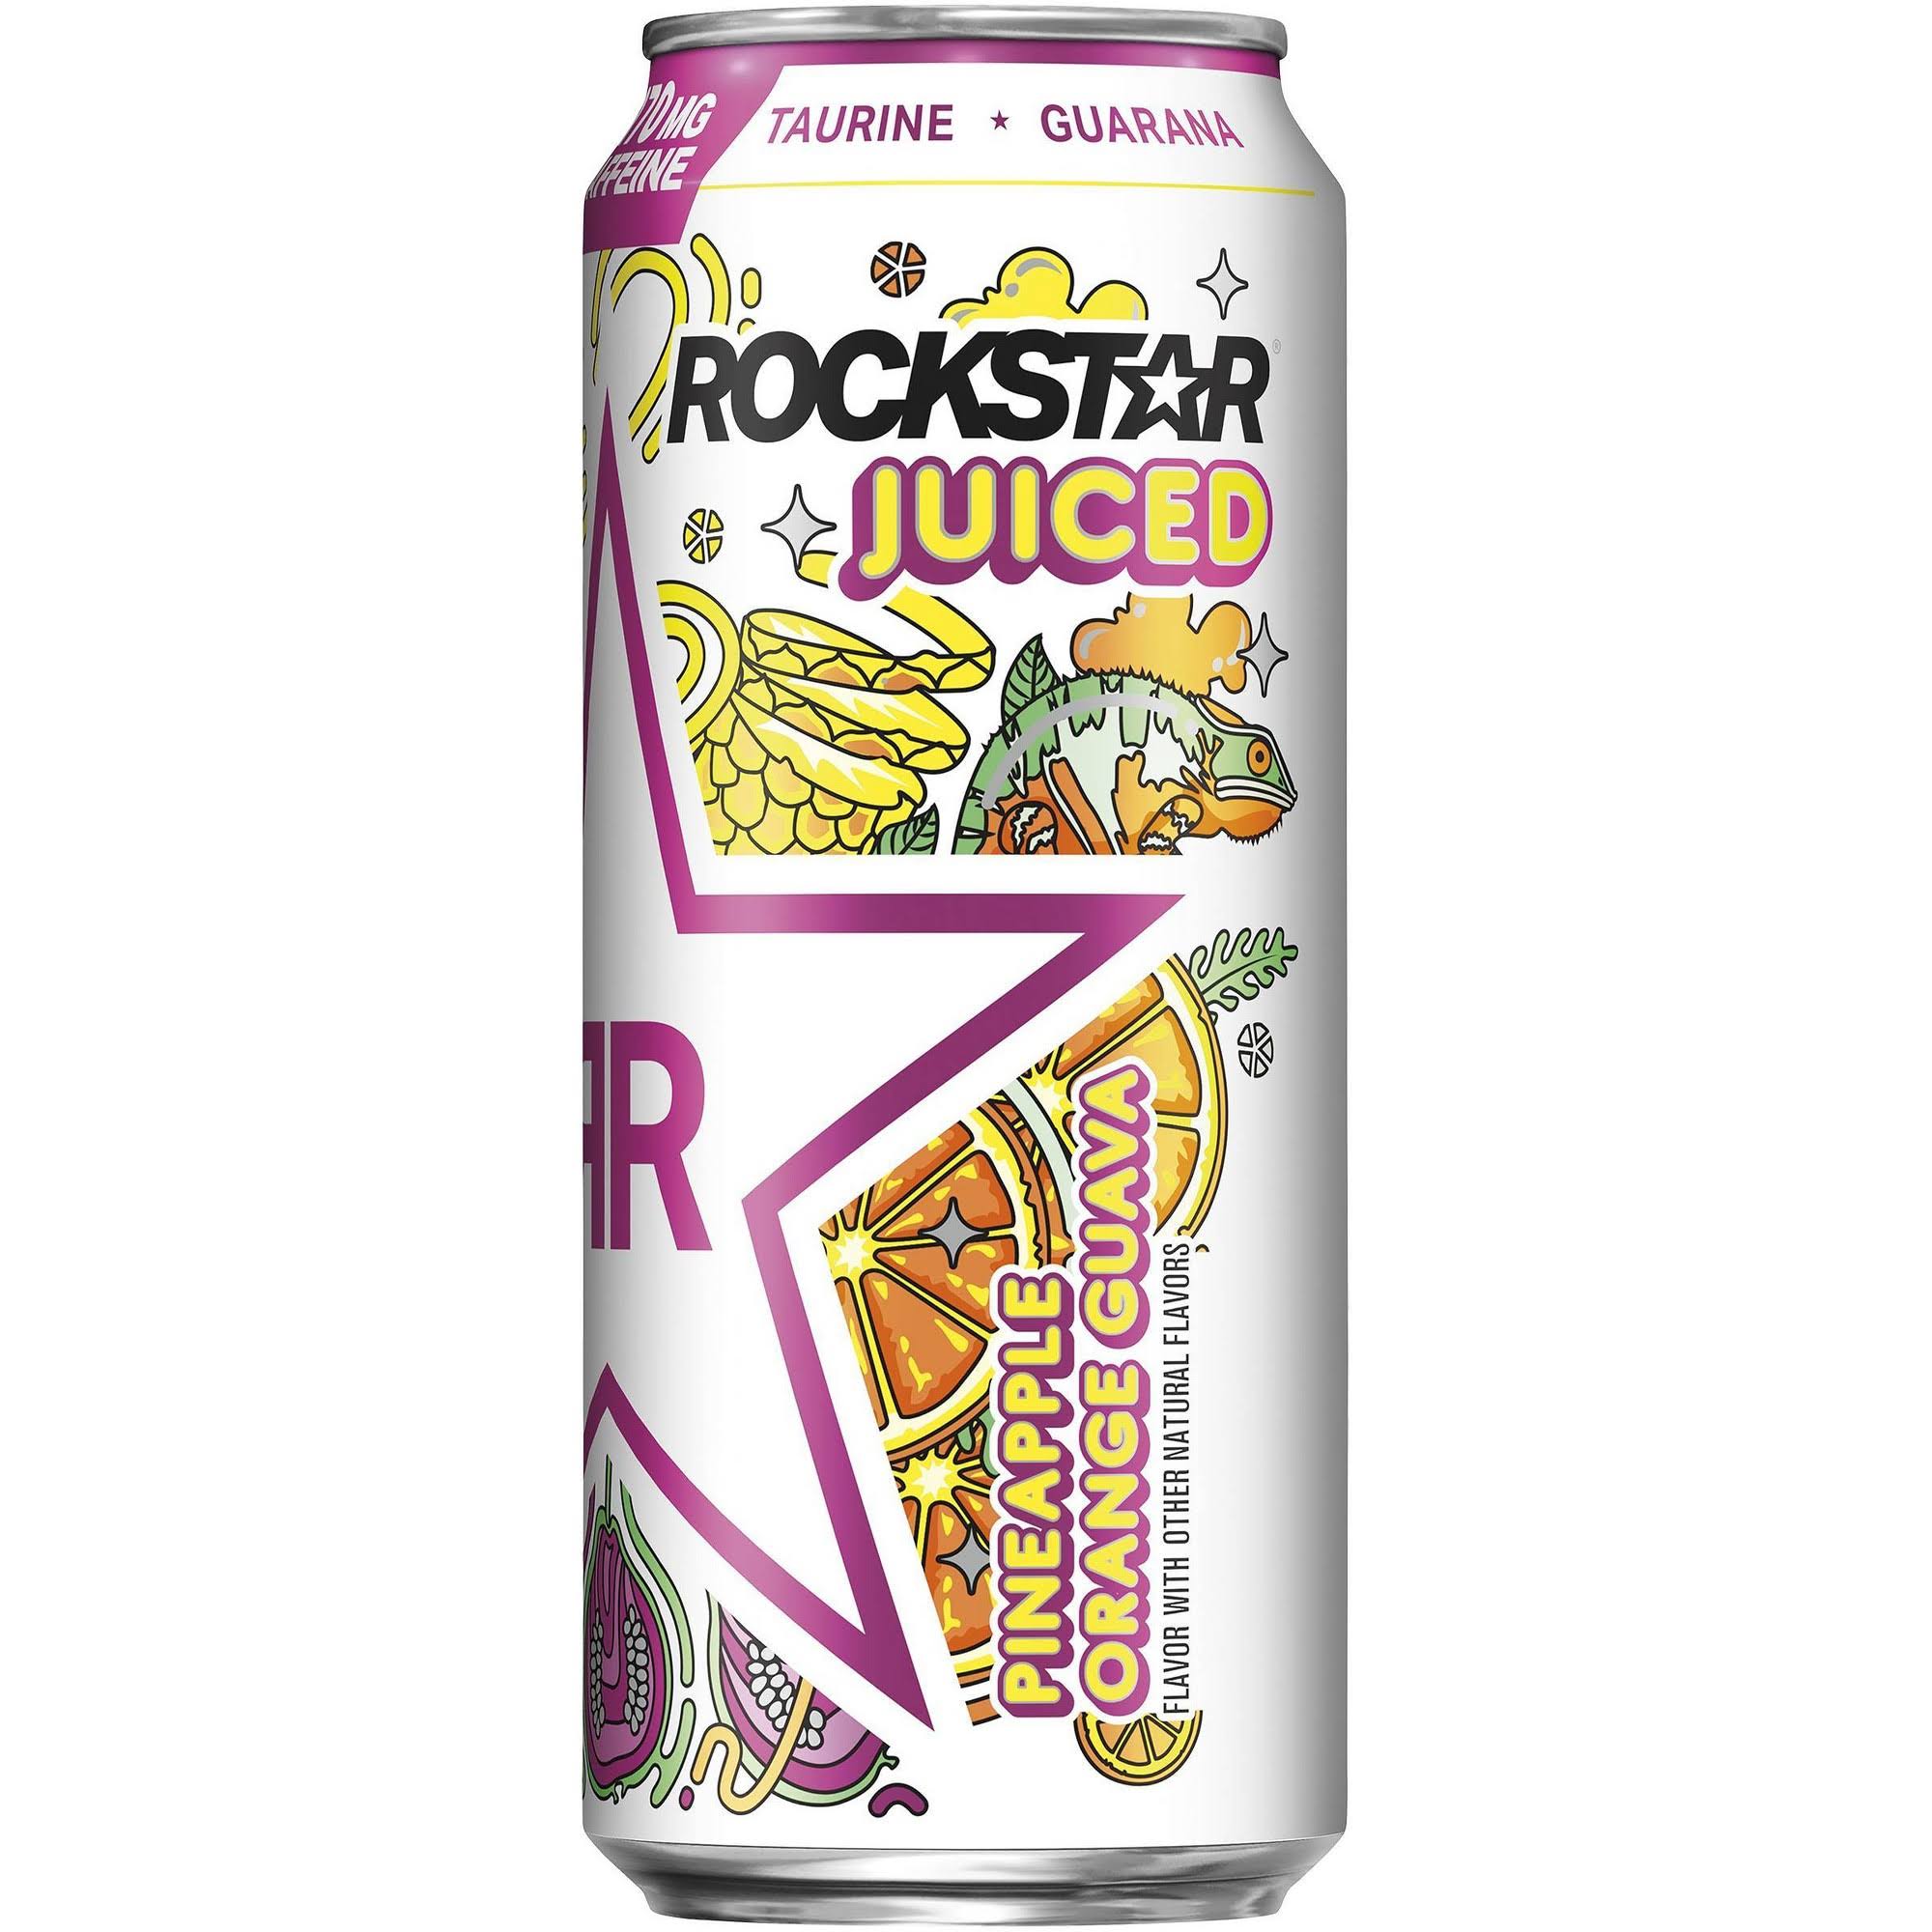 Rockstar Energy Drink, Pineapple Orange Guava, Juiced - 16 fl oz